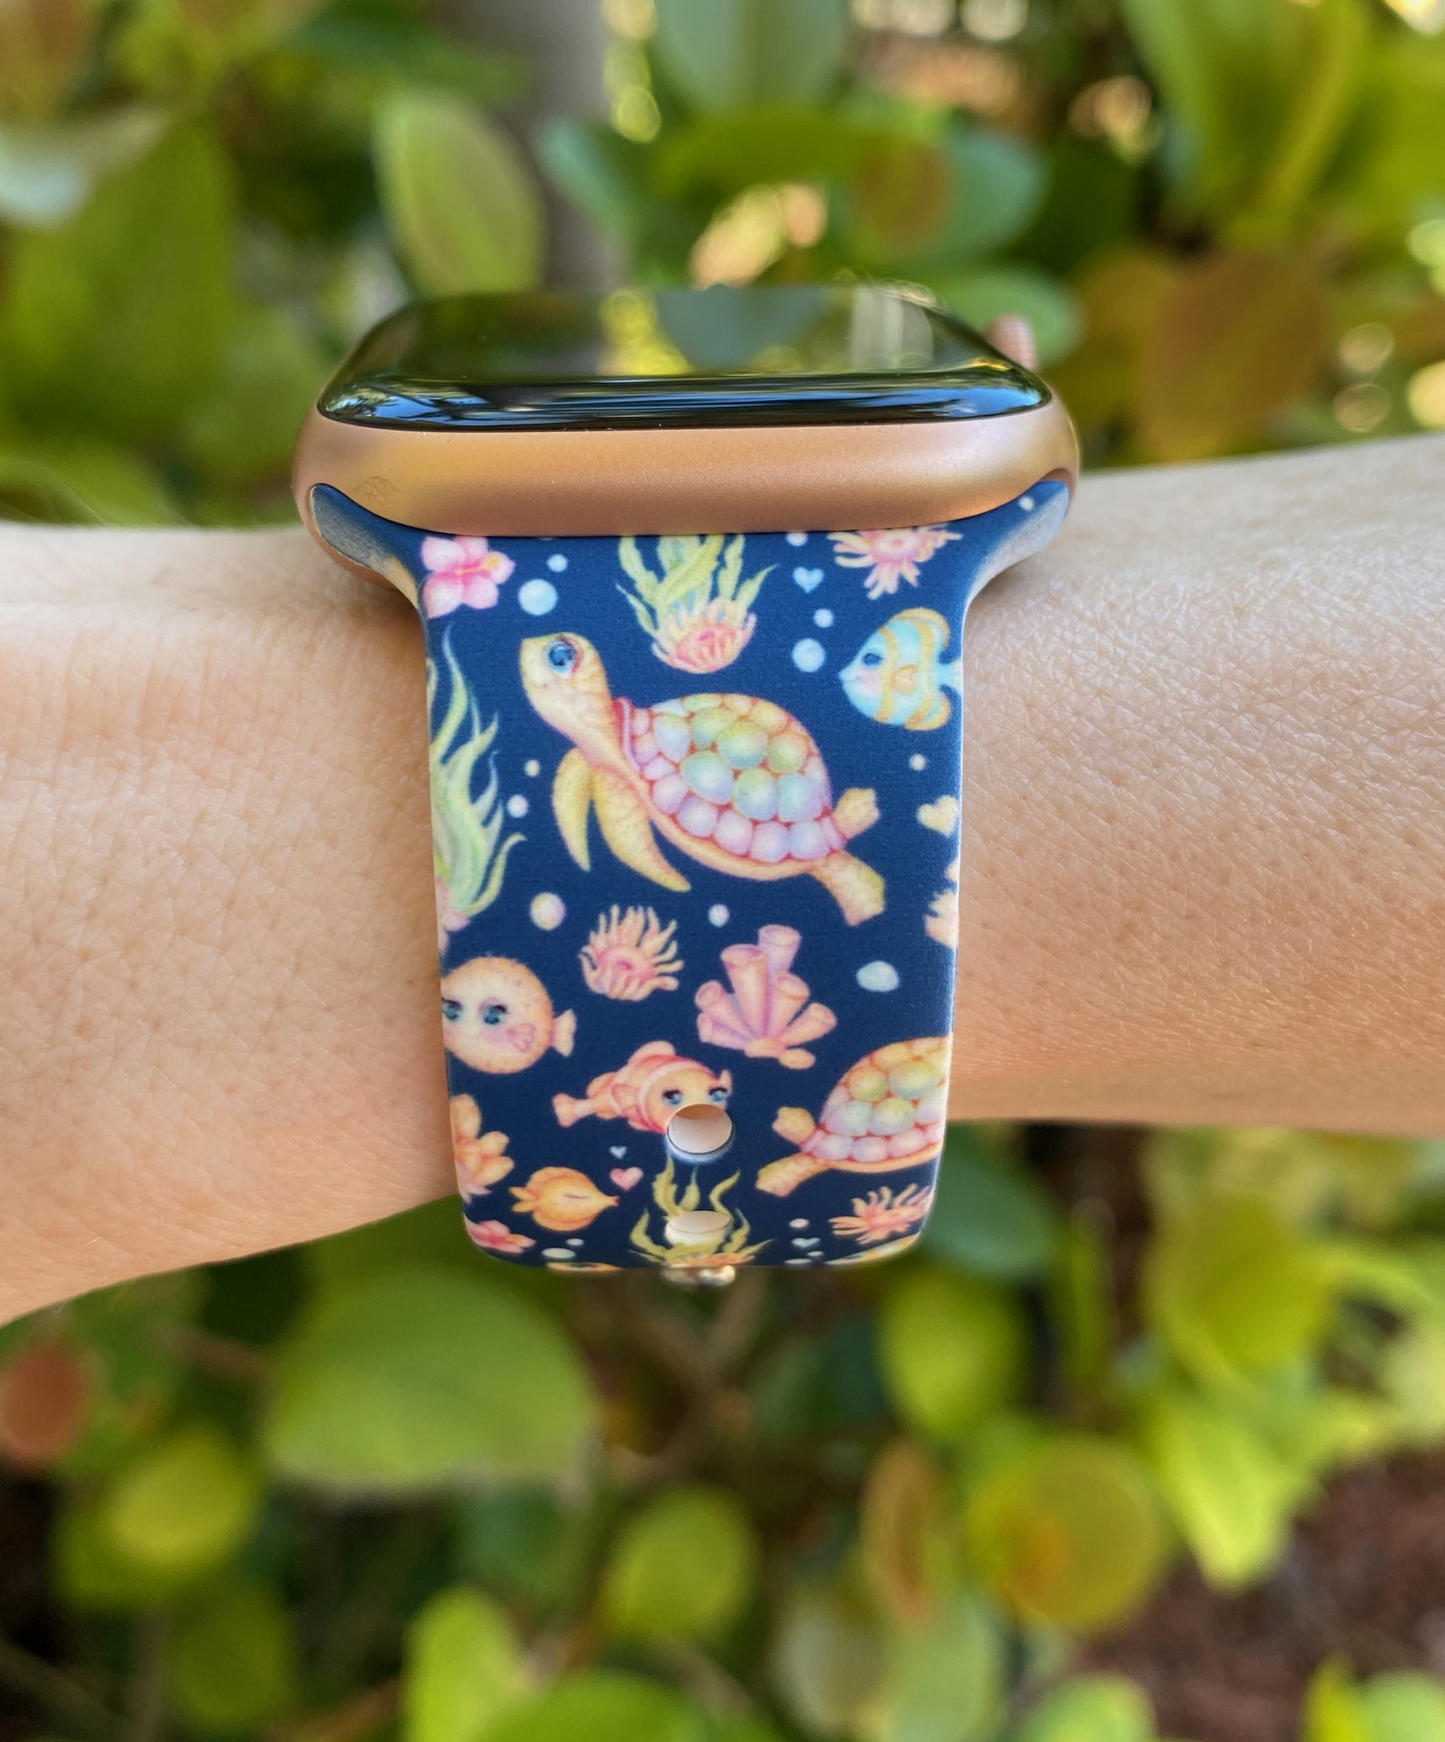 Cute Turtles Apple Watch Band